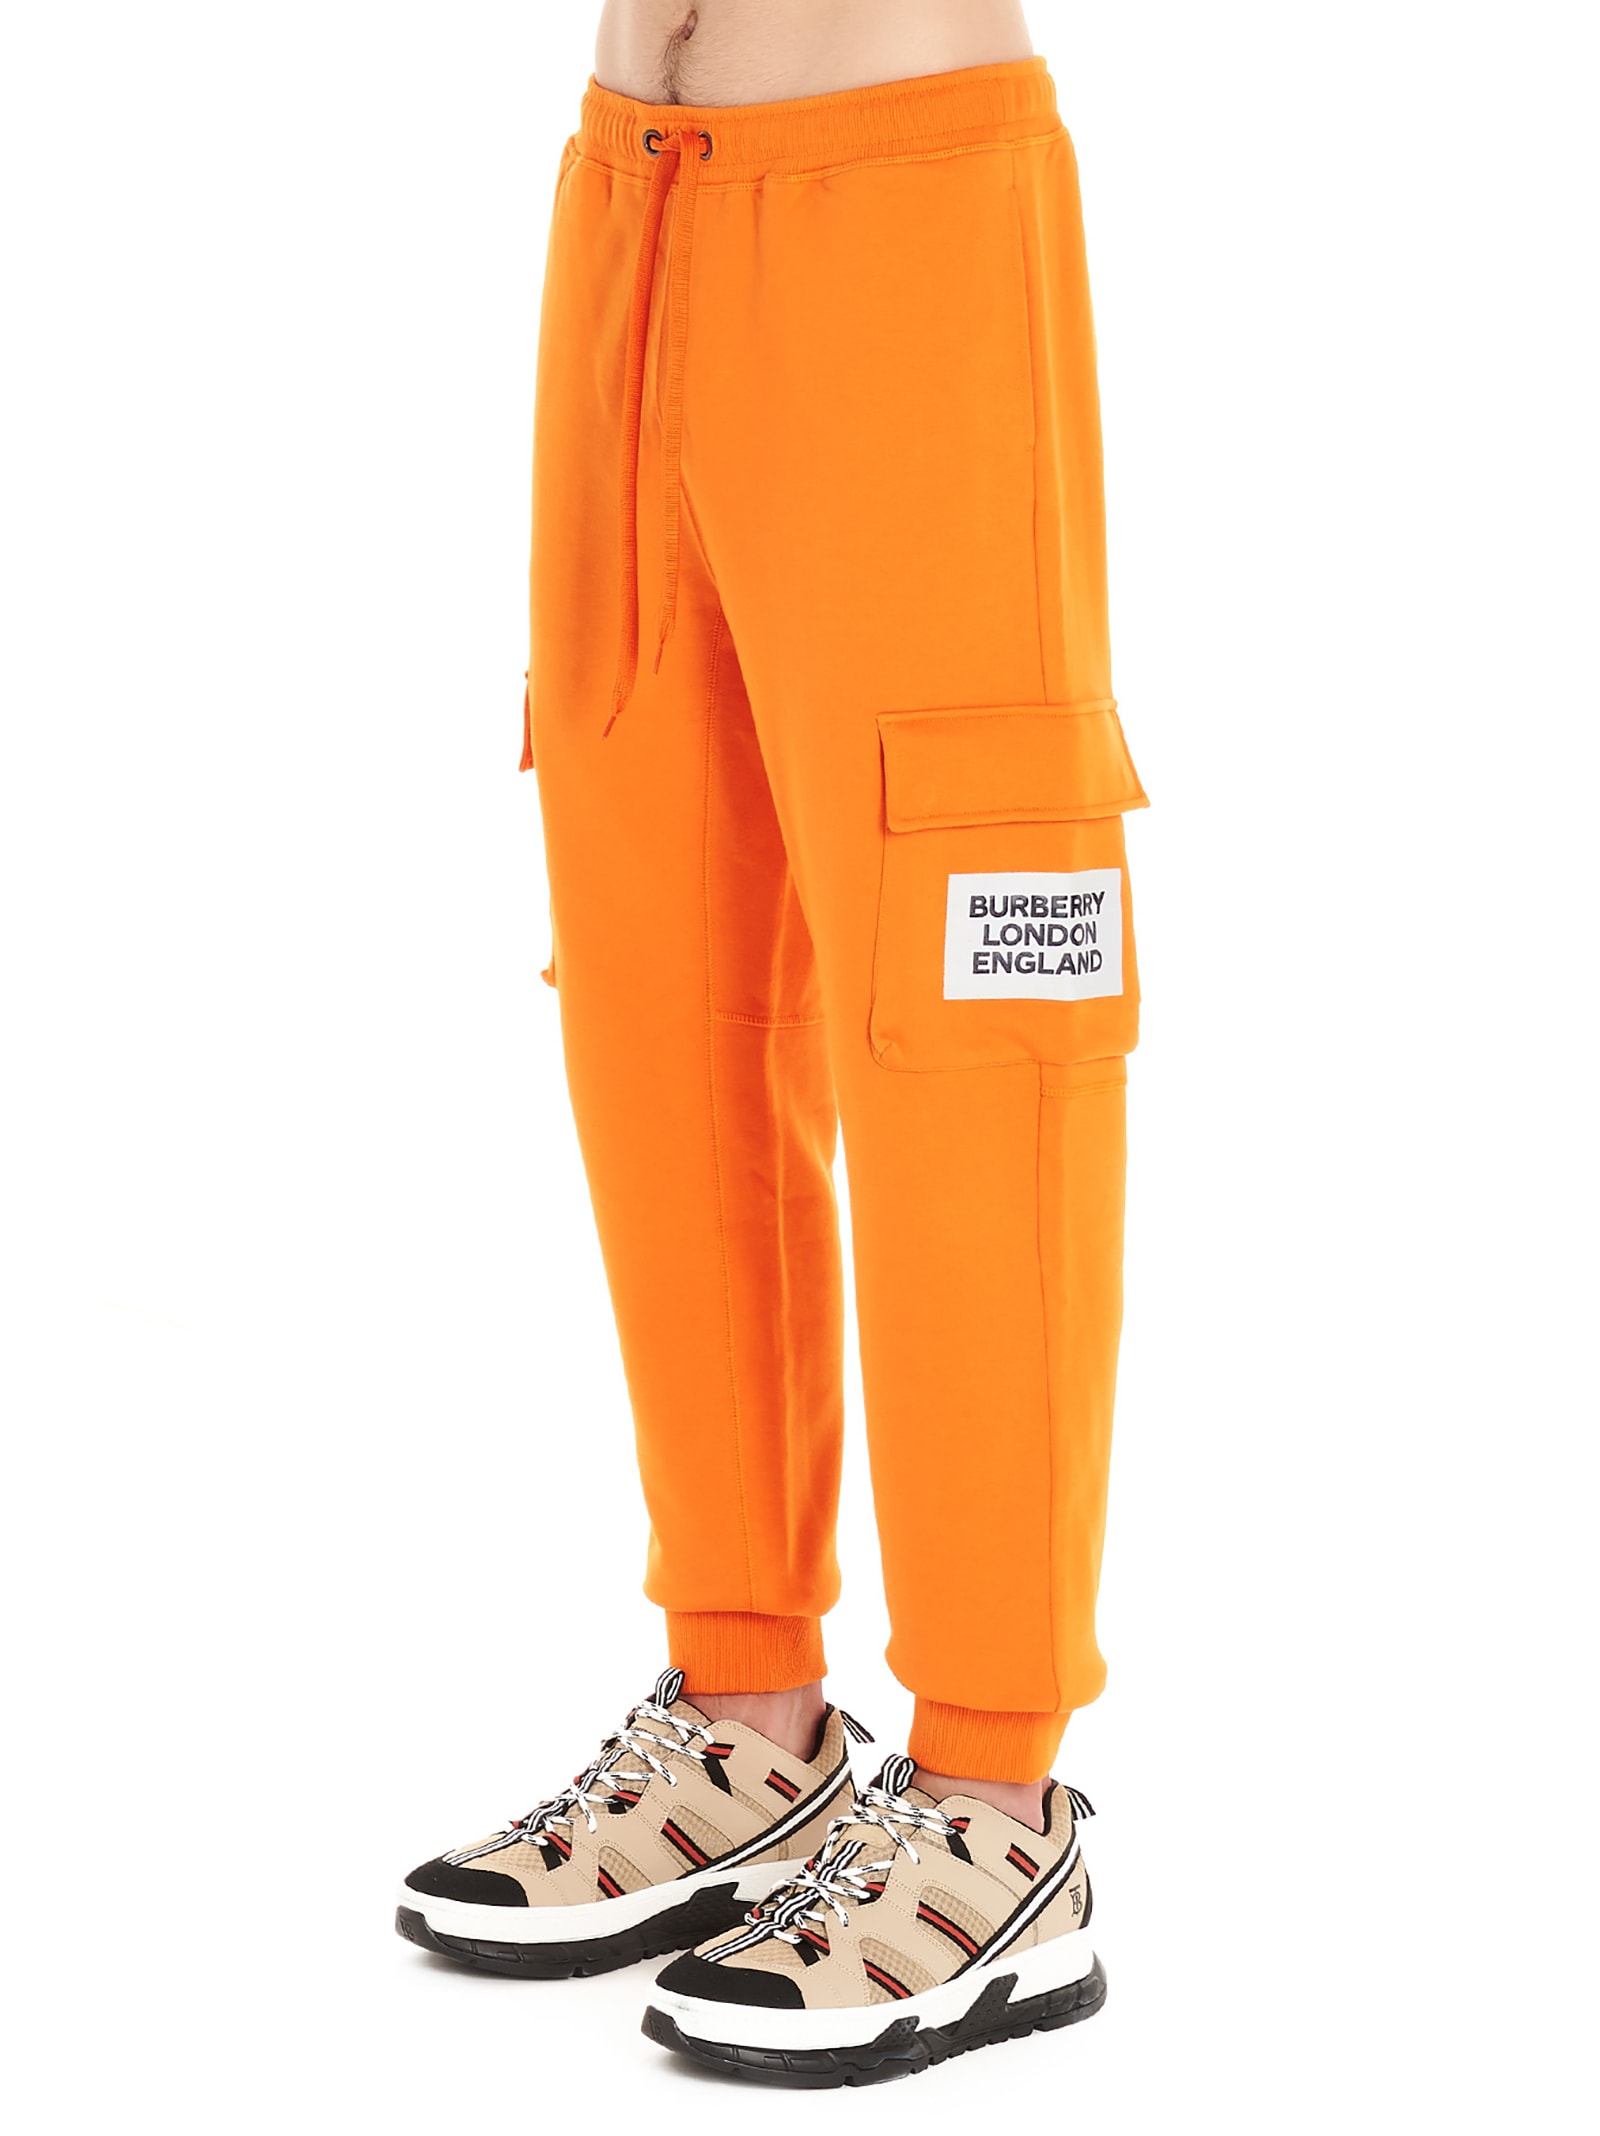 burberry pants mens orange